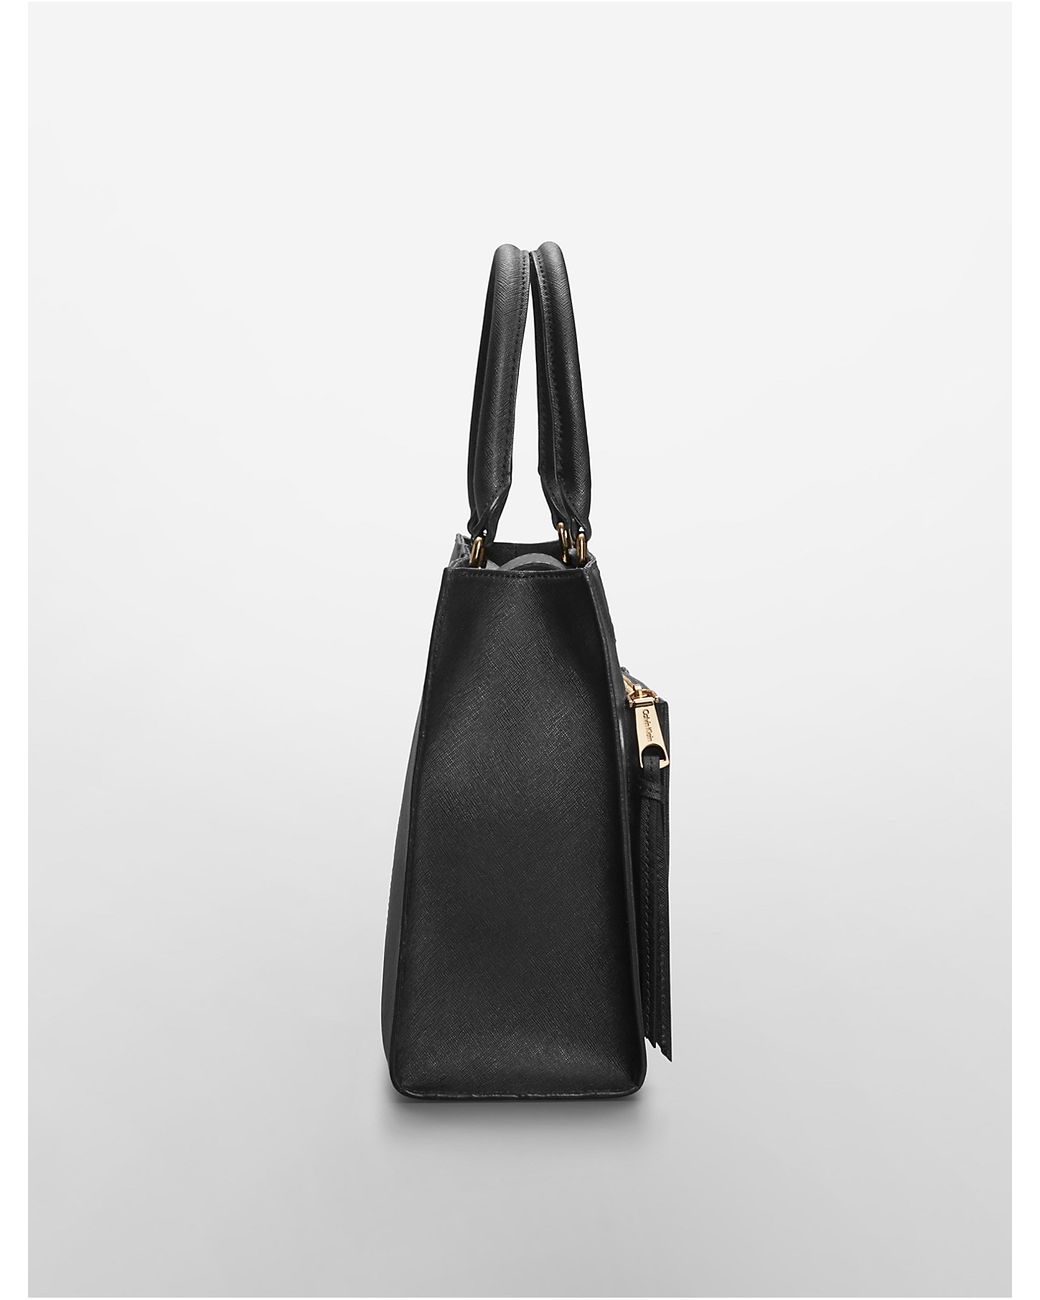 Calvin Klein Saffiano Leather Small Tote Bag in Black/Gold (Black) | Lyst